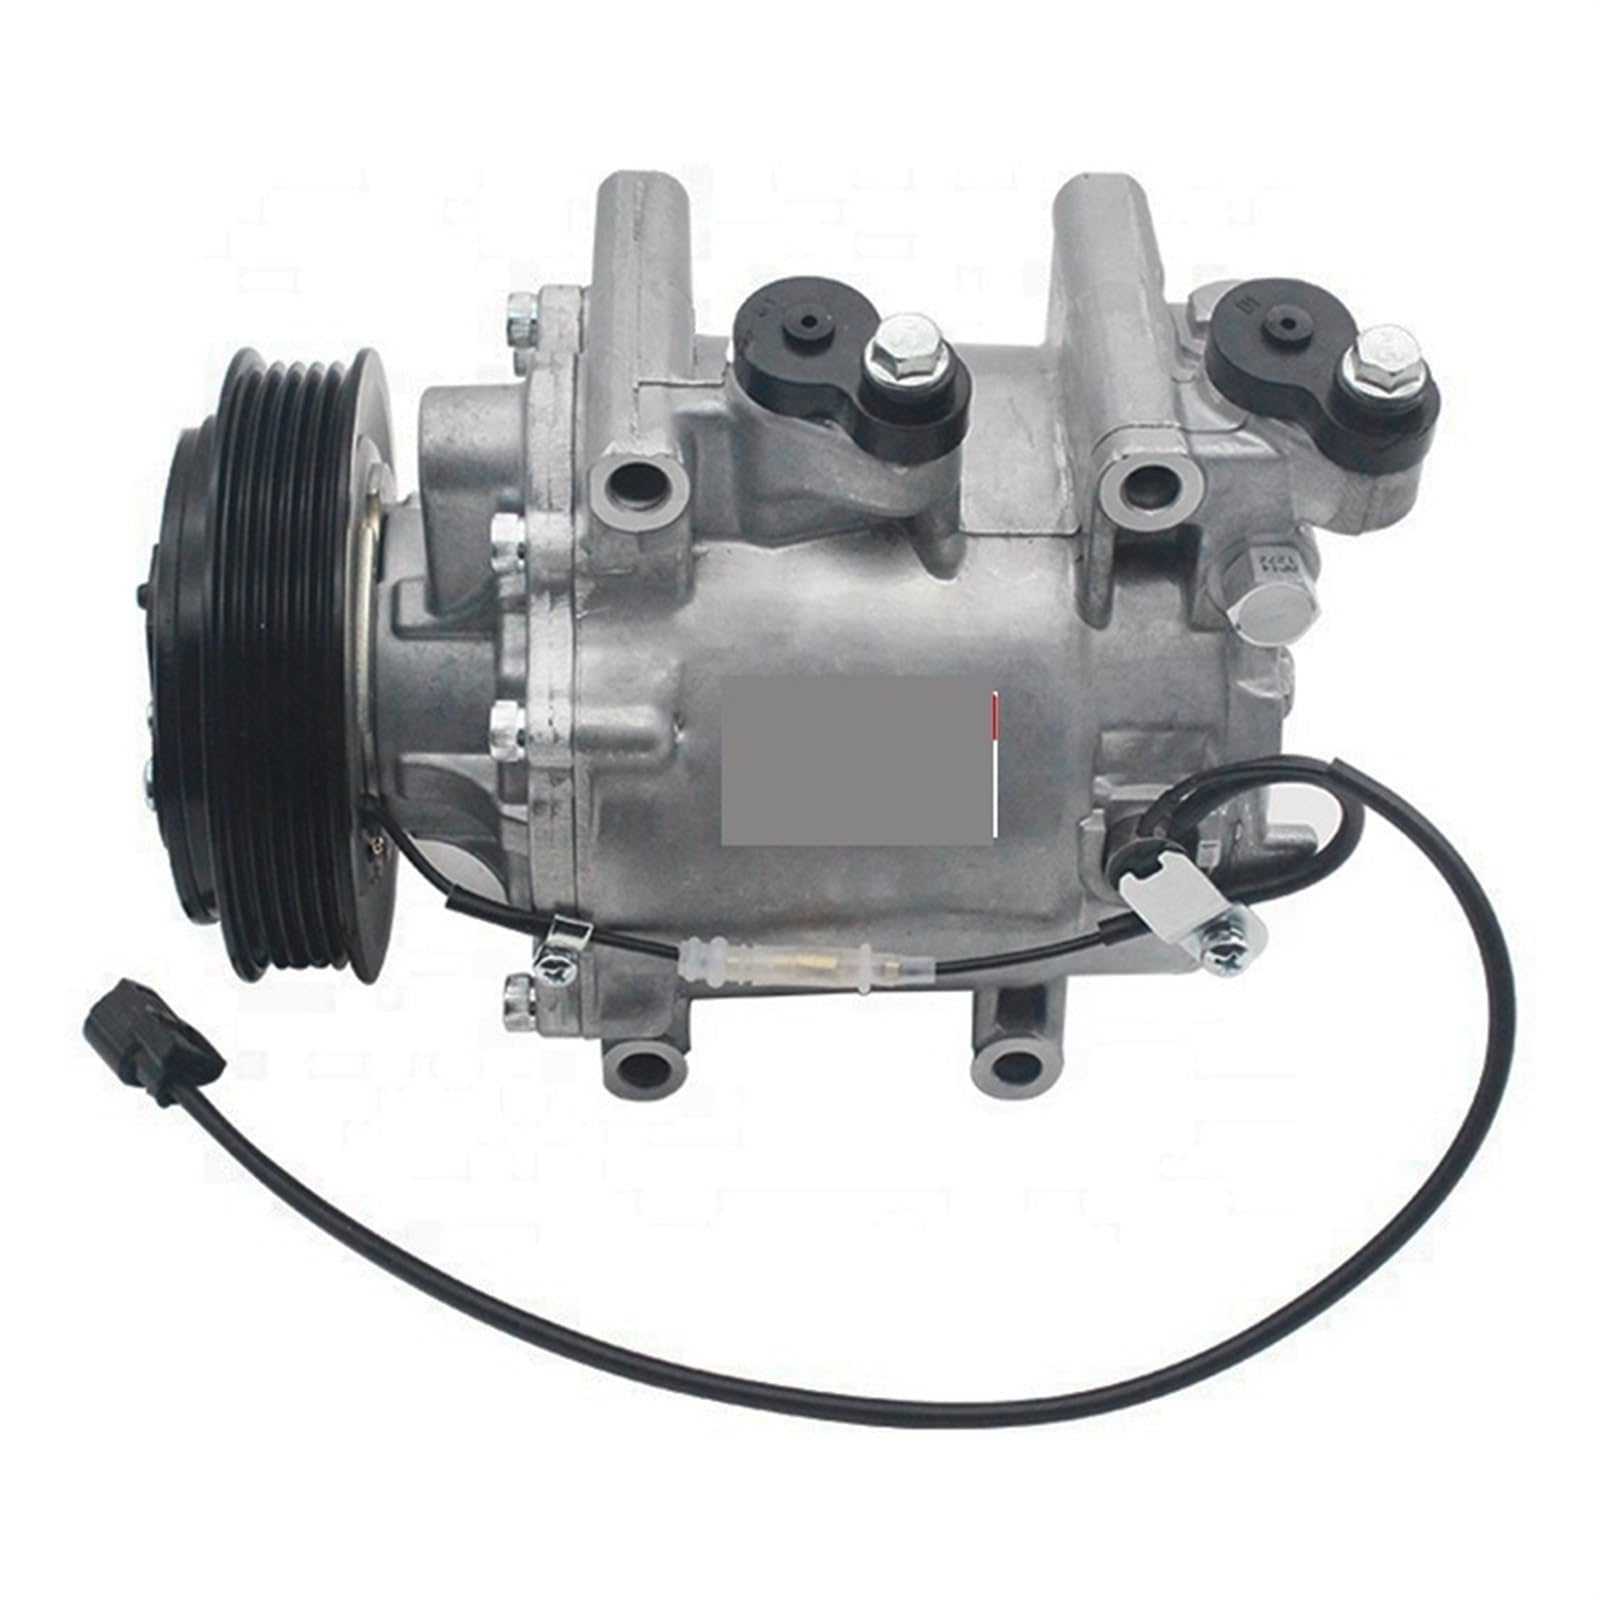 AC Klimaanlage Kompressor für Auto, kompatibel mit CR-z/Insight/Jazz 38810-RBJ-006 38810-RBJ-016 38810RBJ006 38810RBJ016 von LJBaab